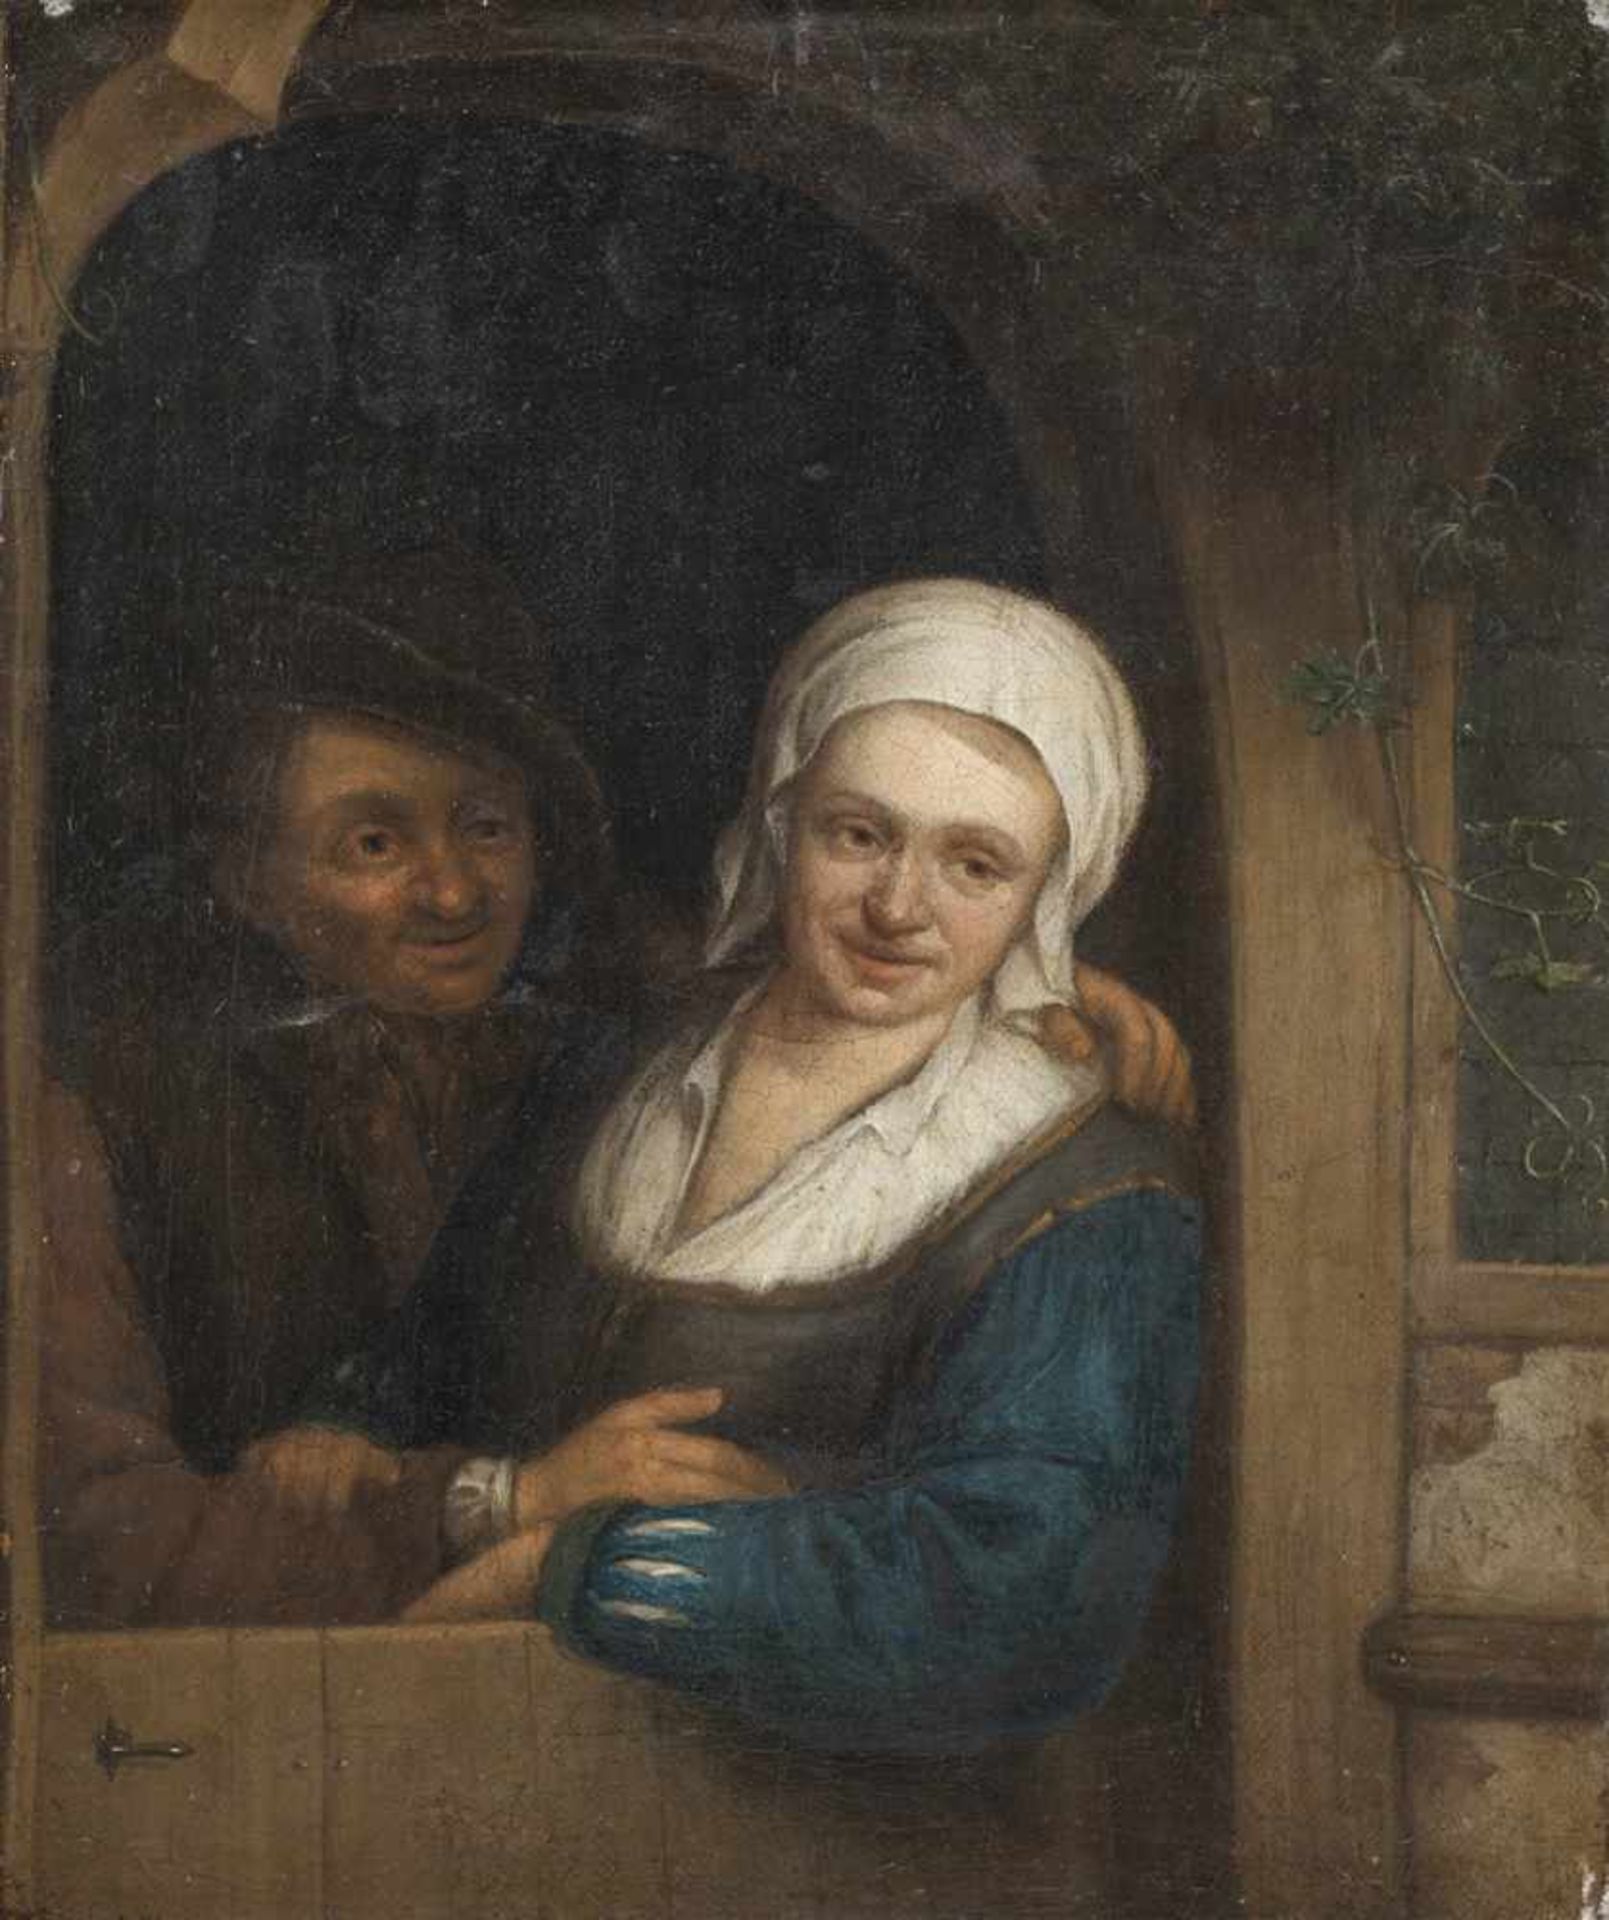 Ostade, Adriaen van (Nachfolger)Haarlem 1610 - 168432 x 27 cmPaar im Hauseingang. Öl/Lwd./Lwd.